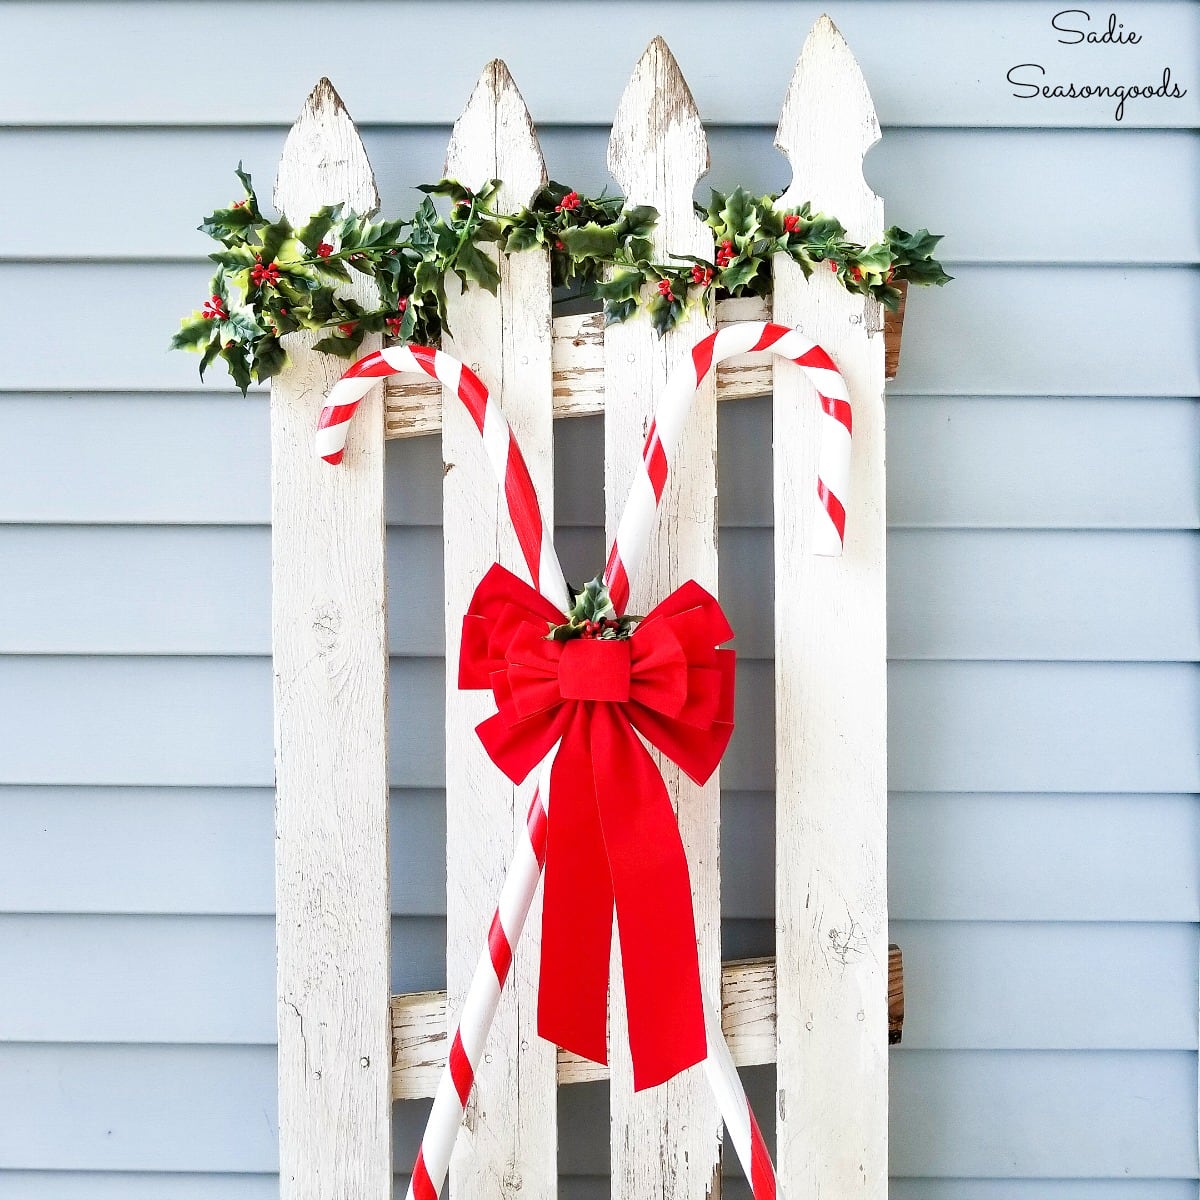 Candy cane decorations for Christmas porch decor